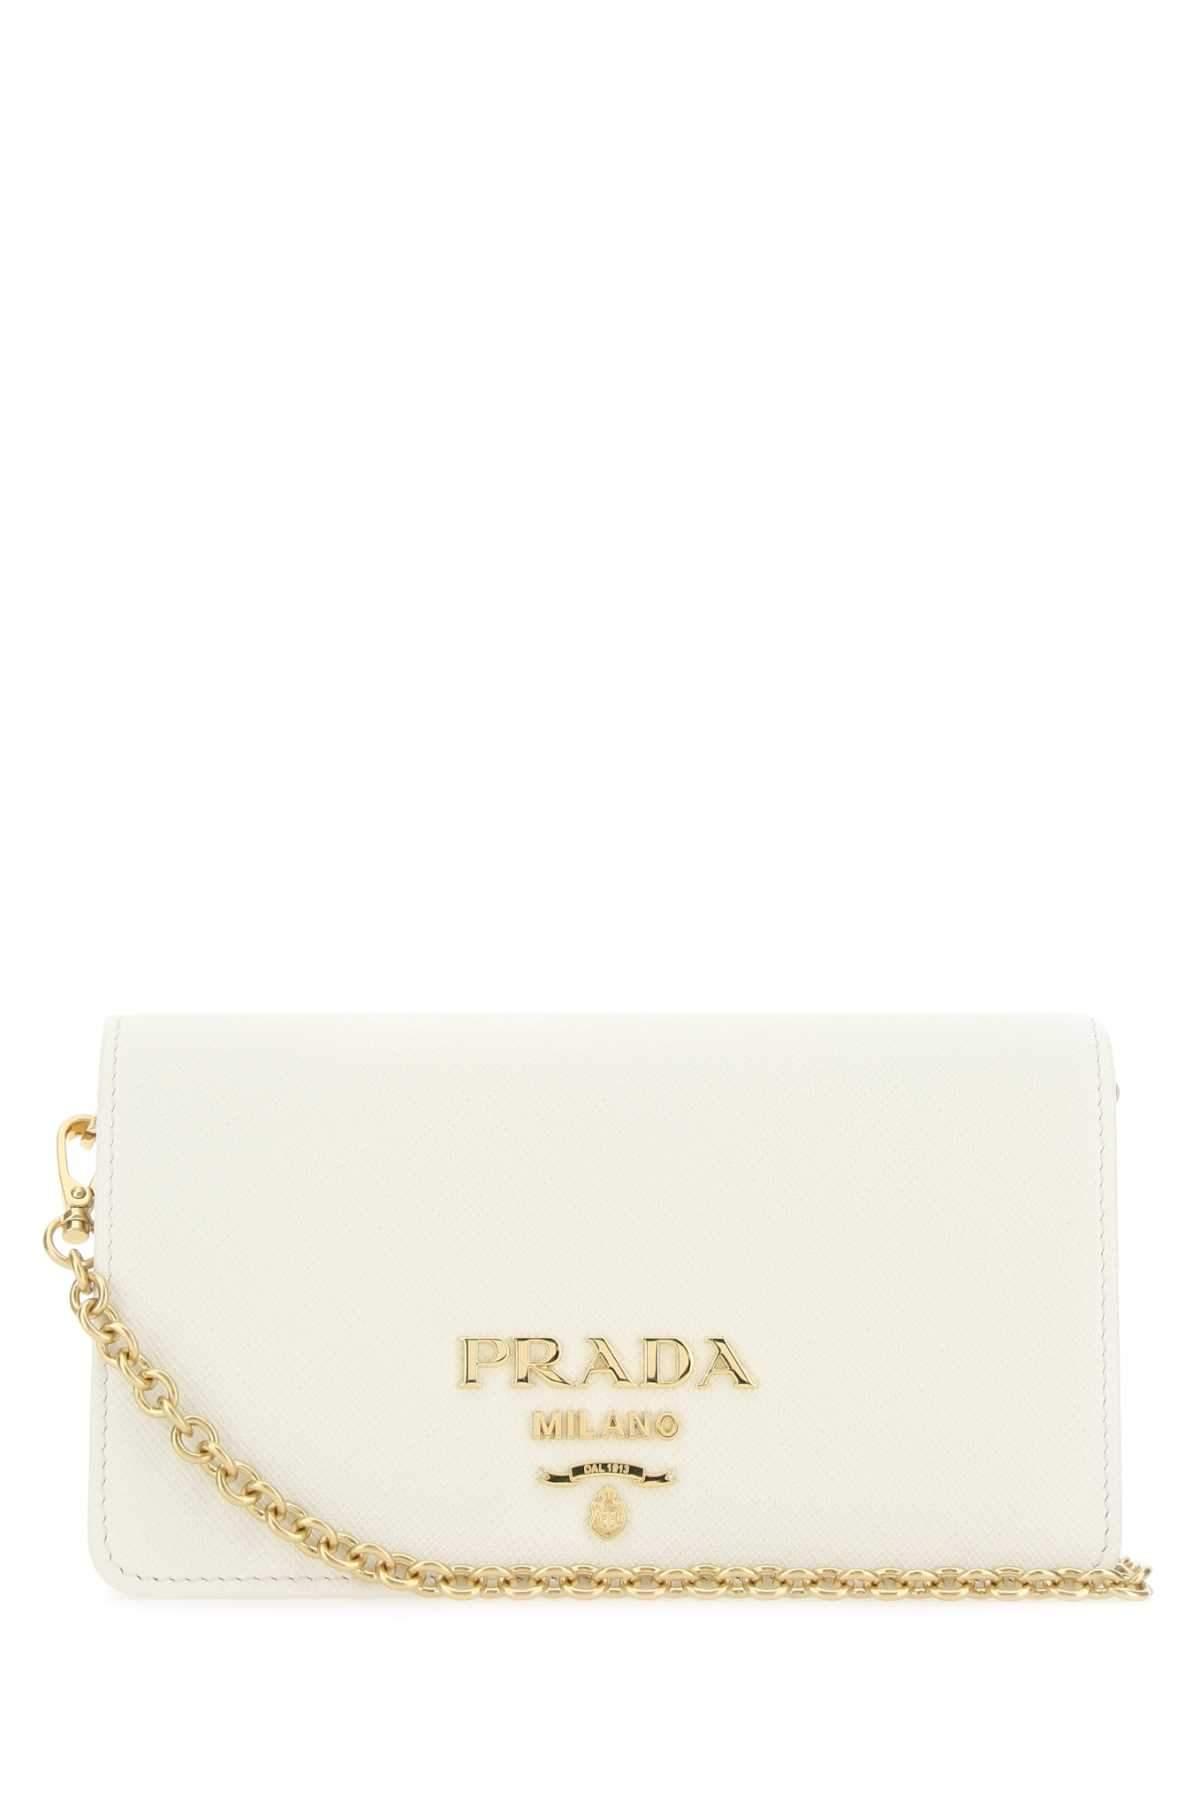 Prada Logo Plaque Chain Clutch Bag in White | Lyst